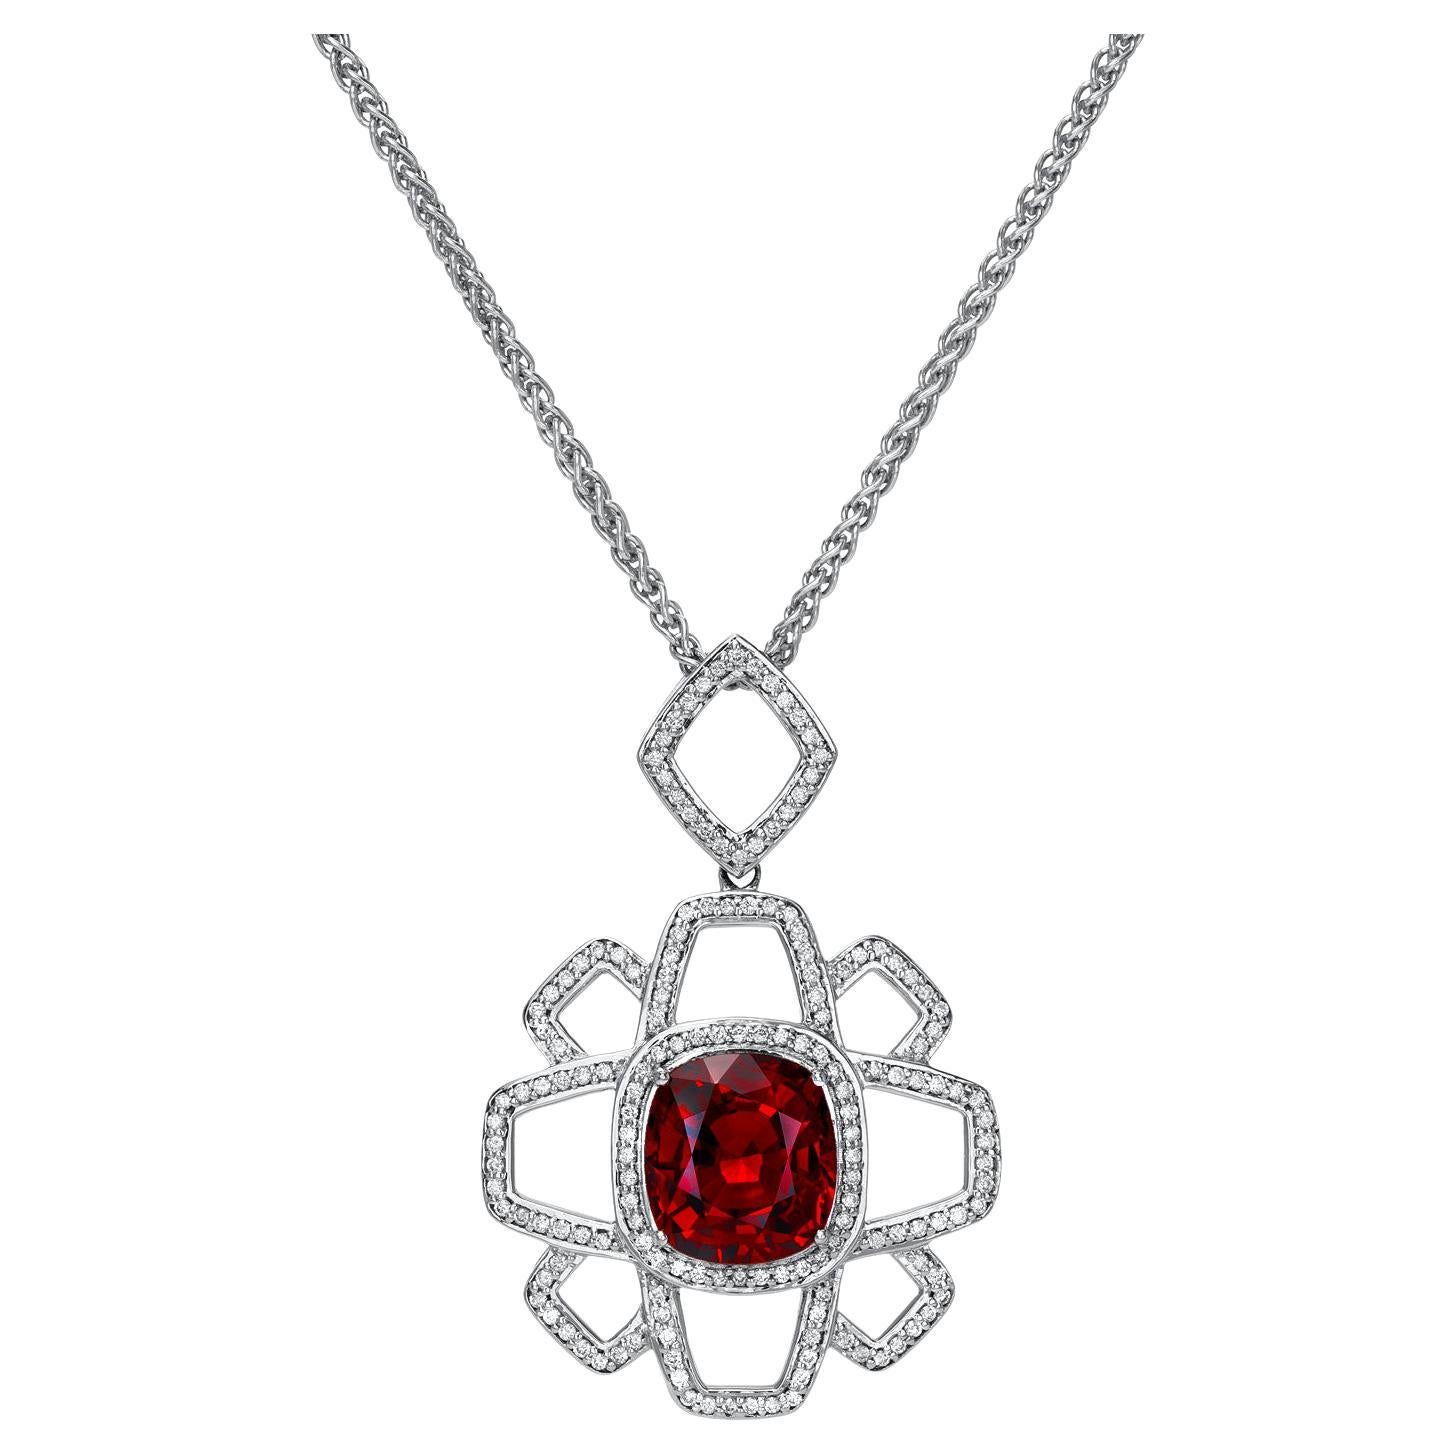 Spessartite Garnet Pendant Necklace 8.31 Carat